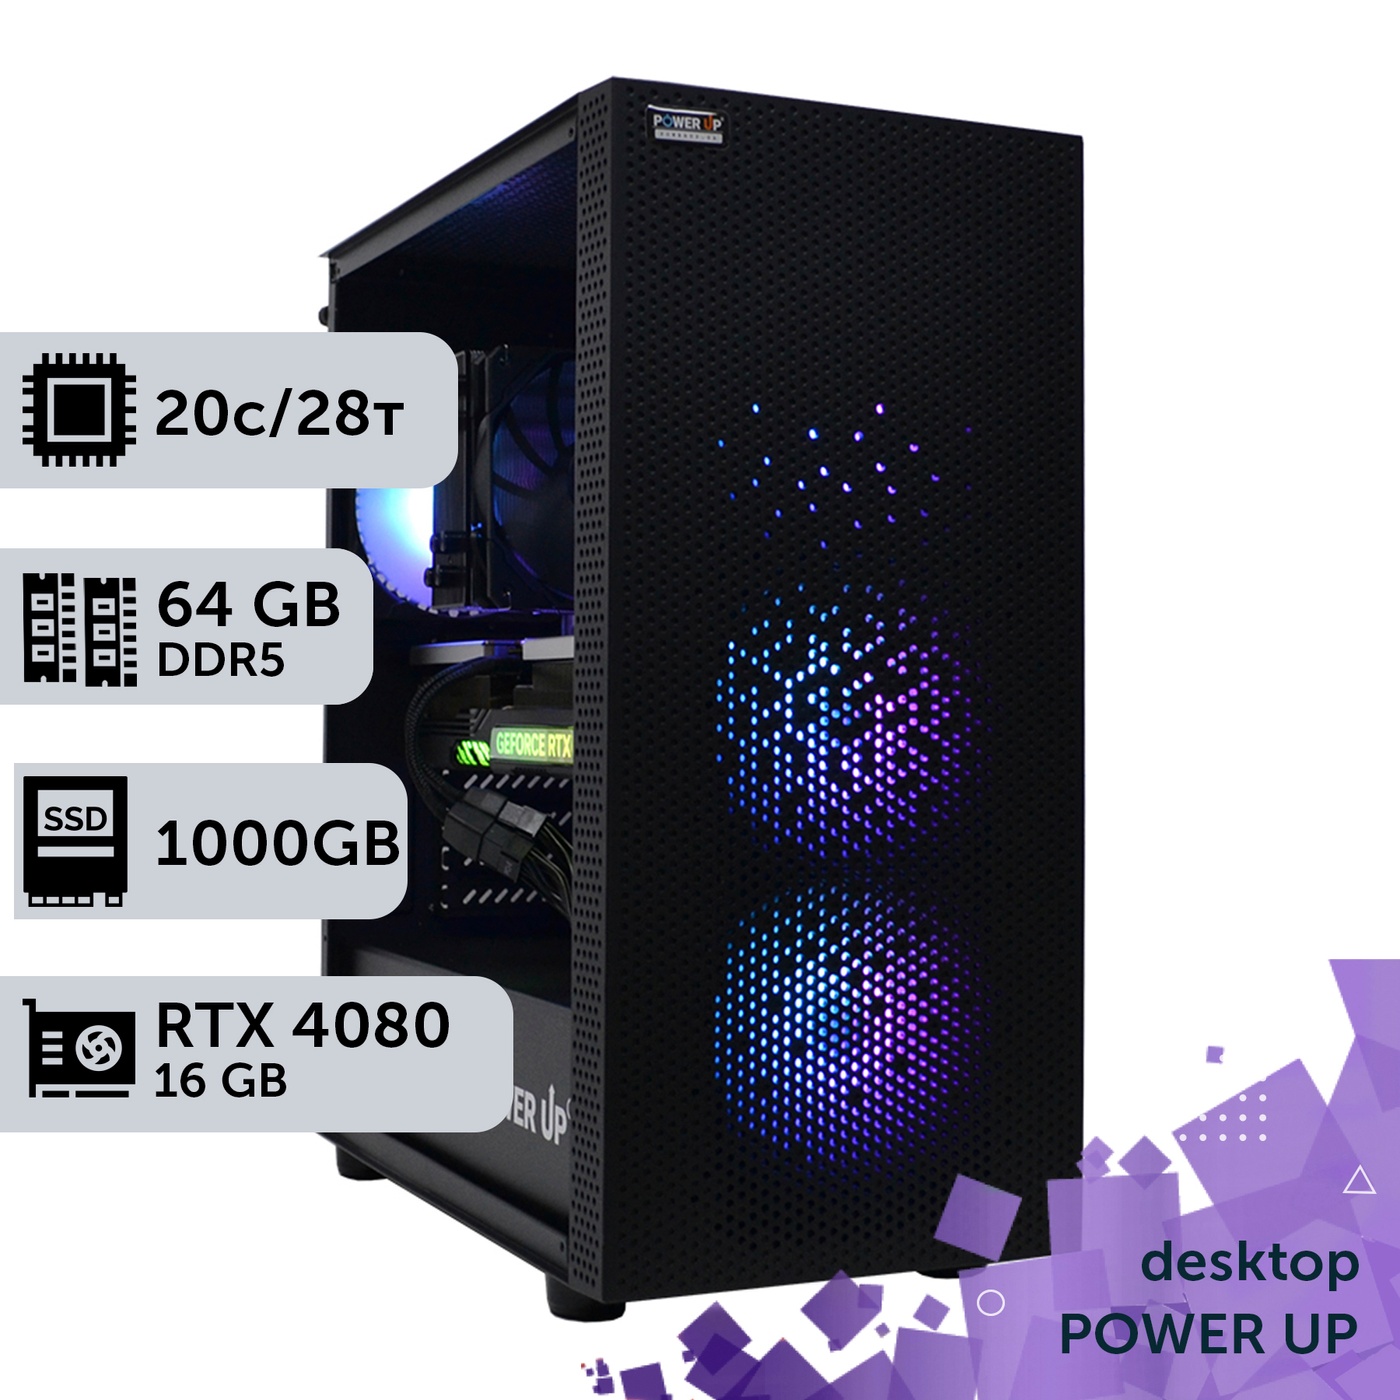 Рабочая станция PowerUp Desktop #323 Core i7 14700K/64 GB/SSD 1TB/GeForce RTX 4080 16GB